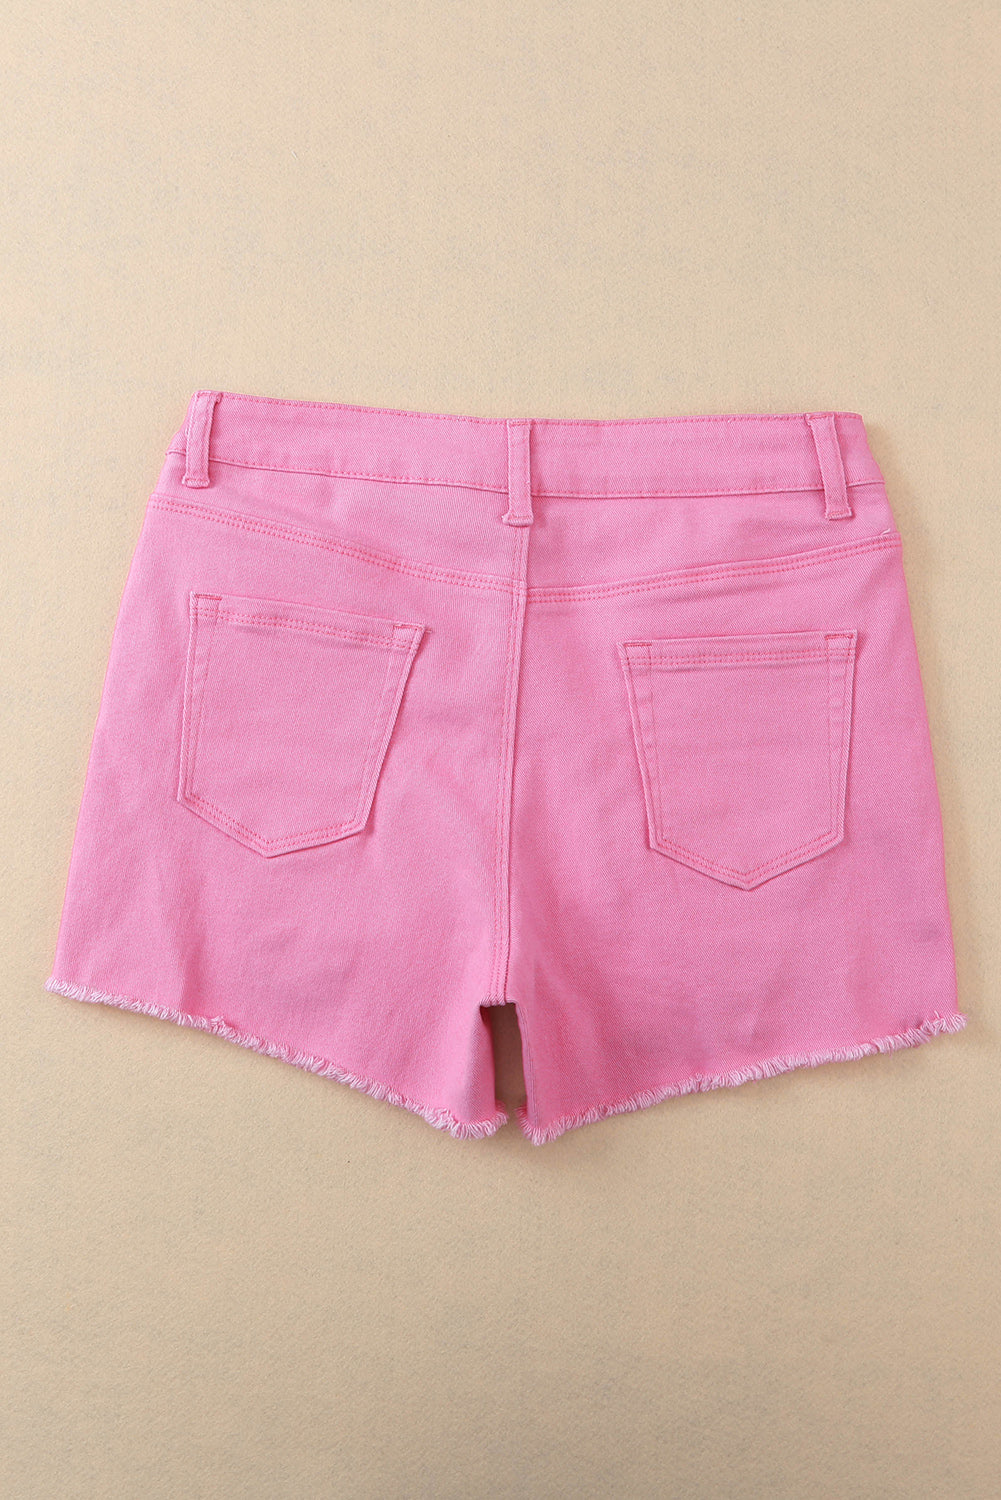 Pantaloncini in denim invecchiato tinta unita rosa